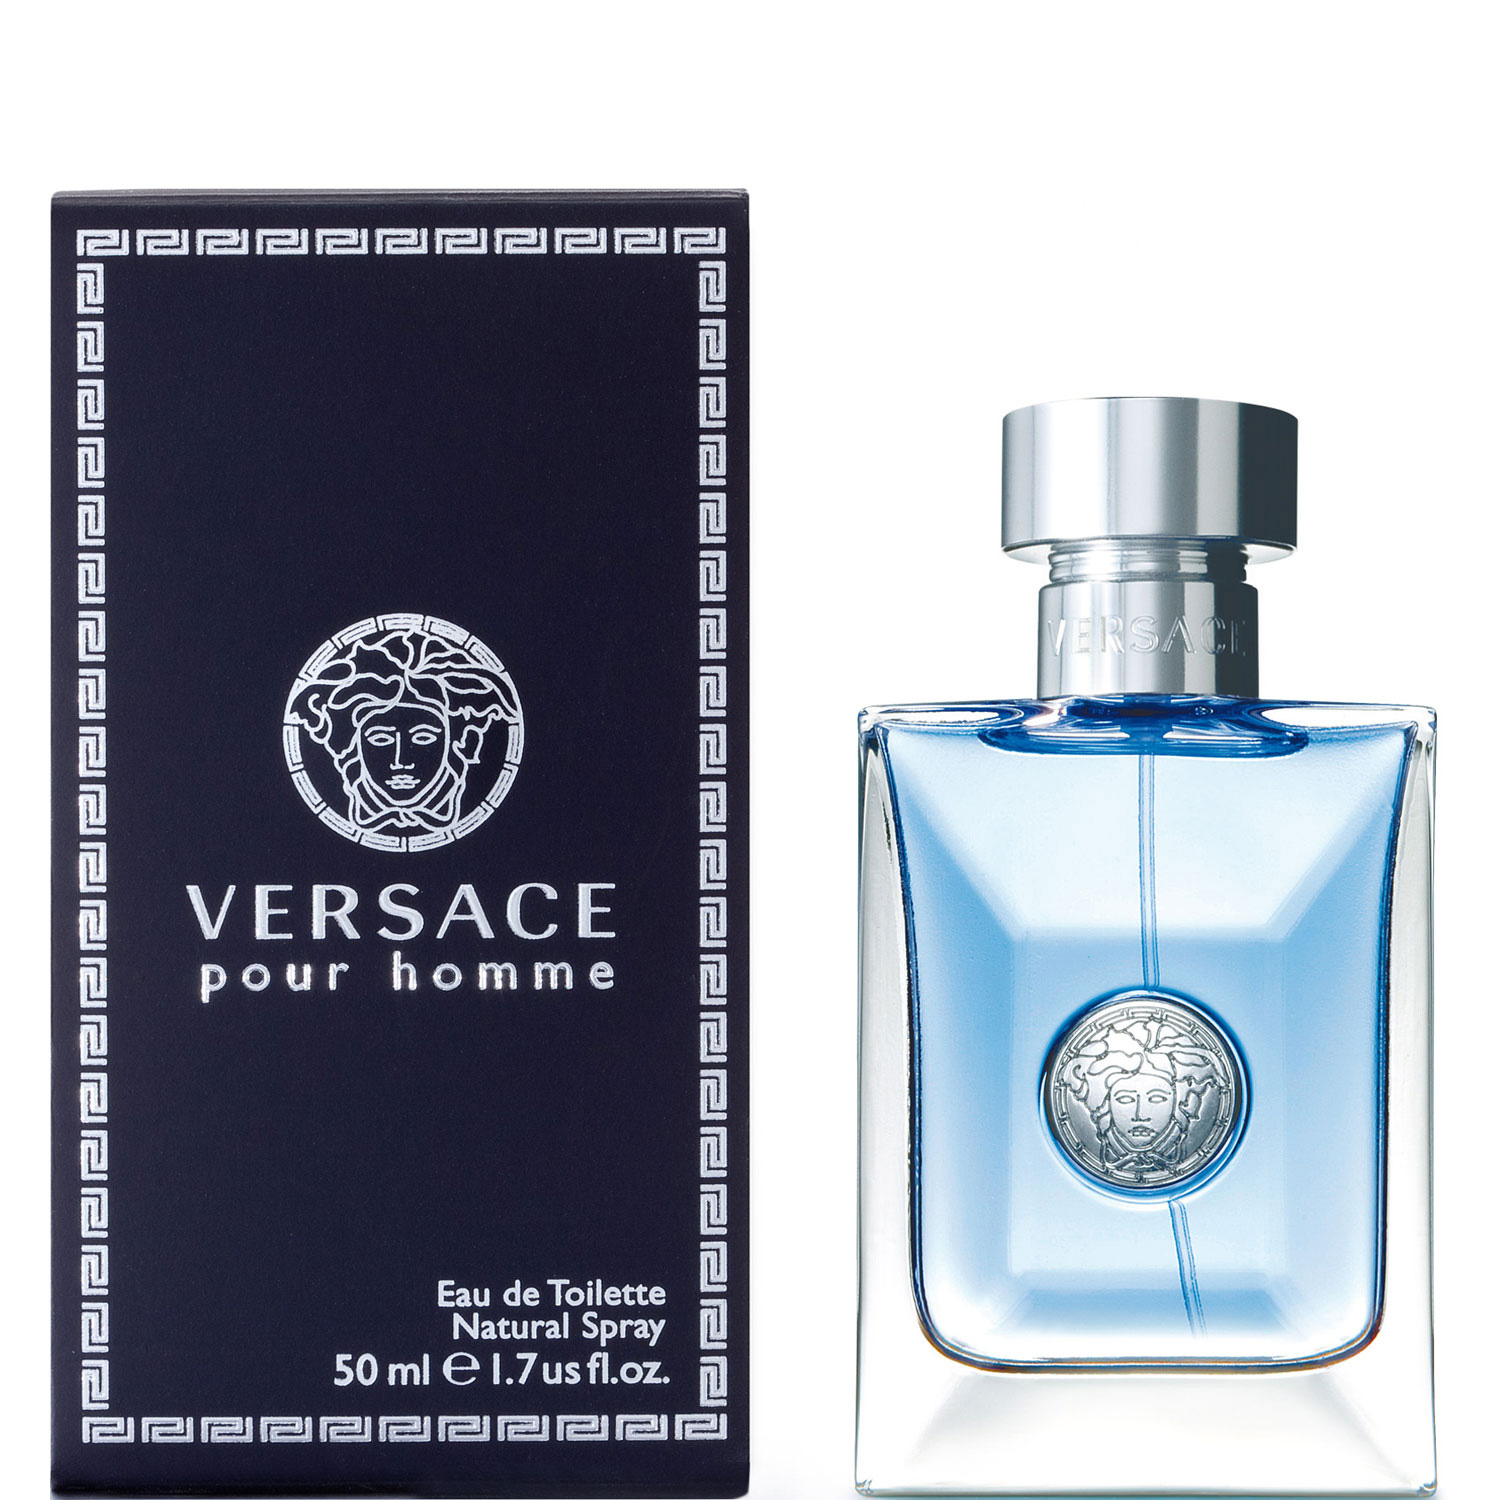 Nước hoa Versace Pour homme 50ml (EDT)